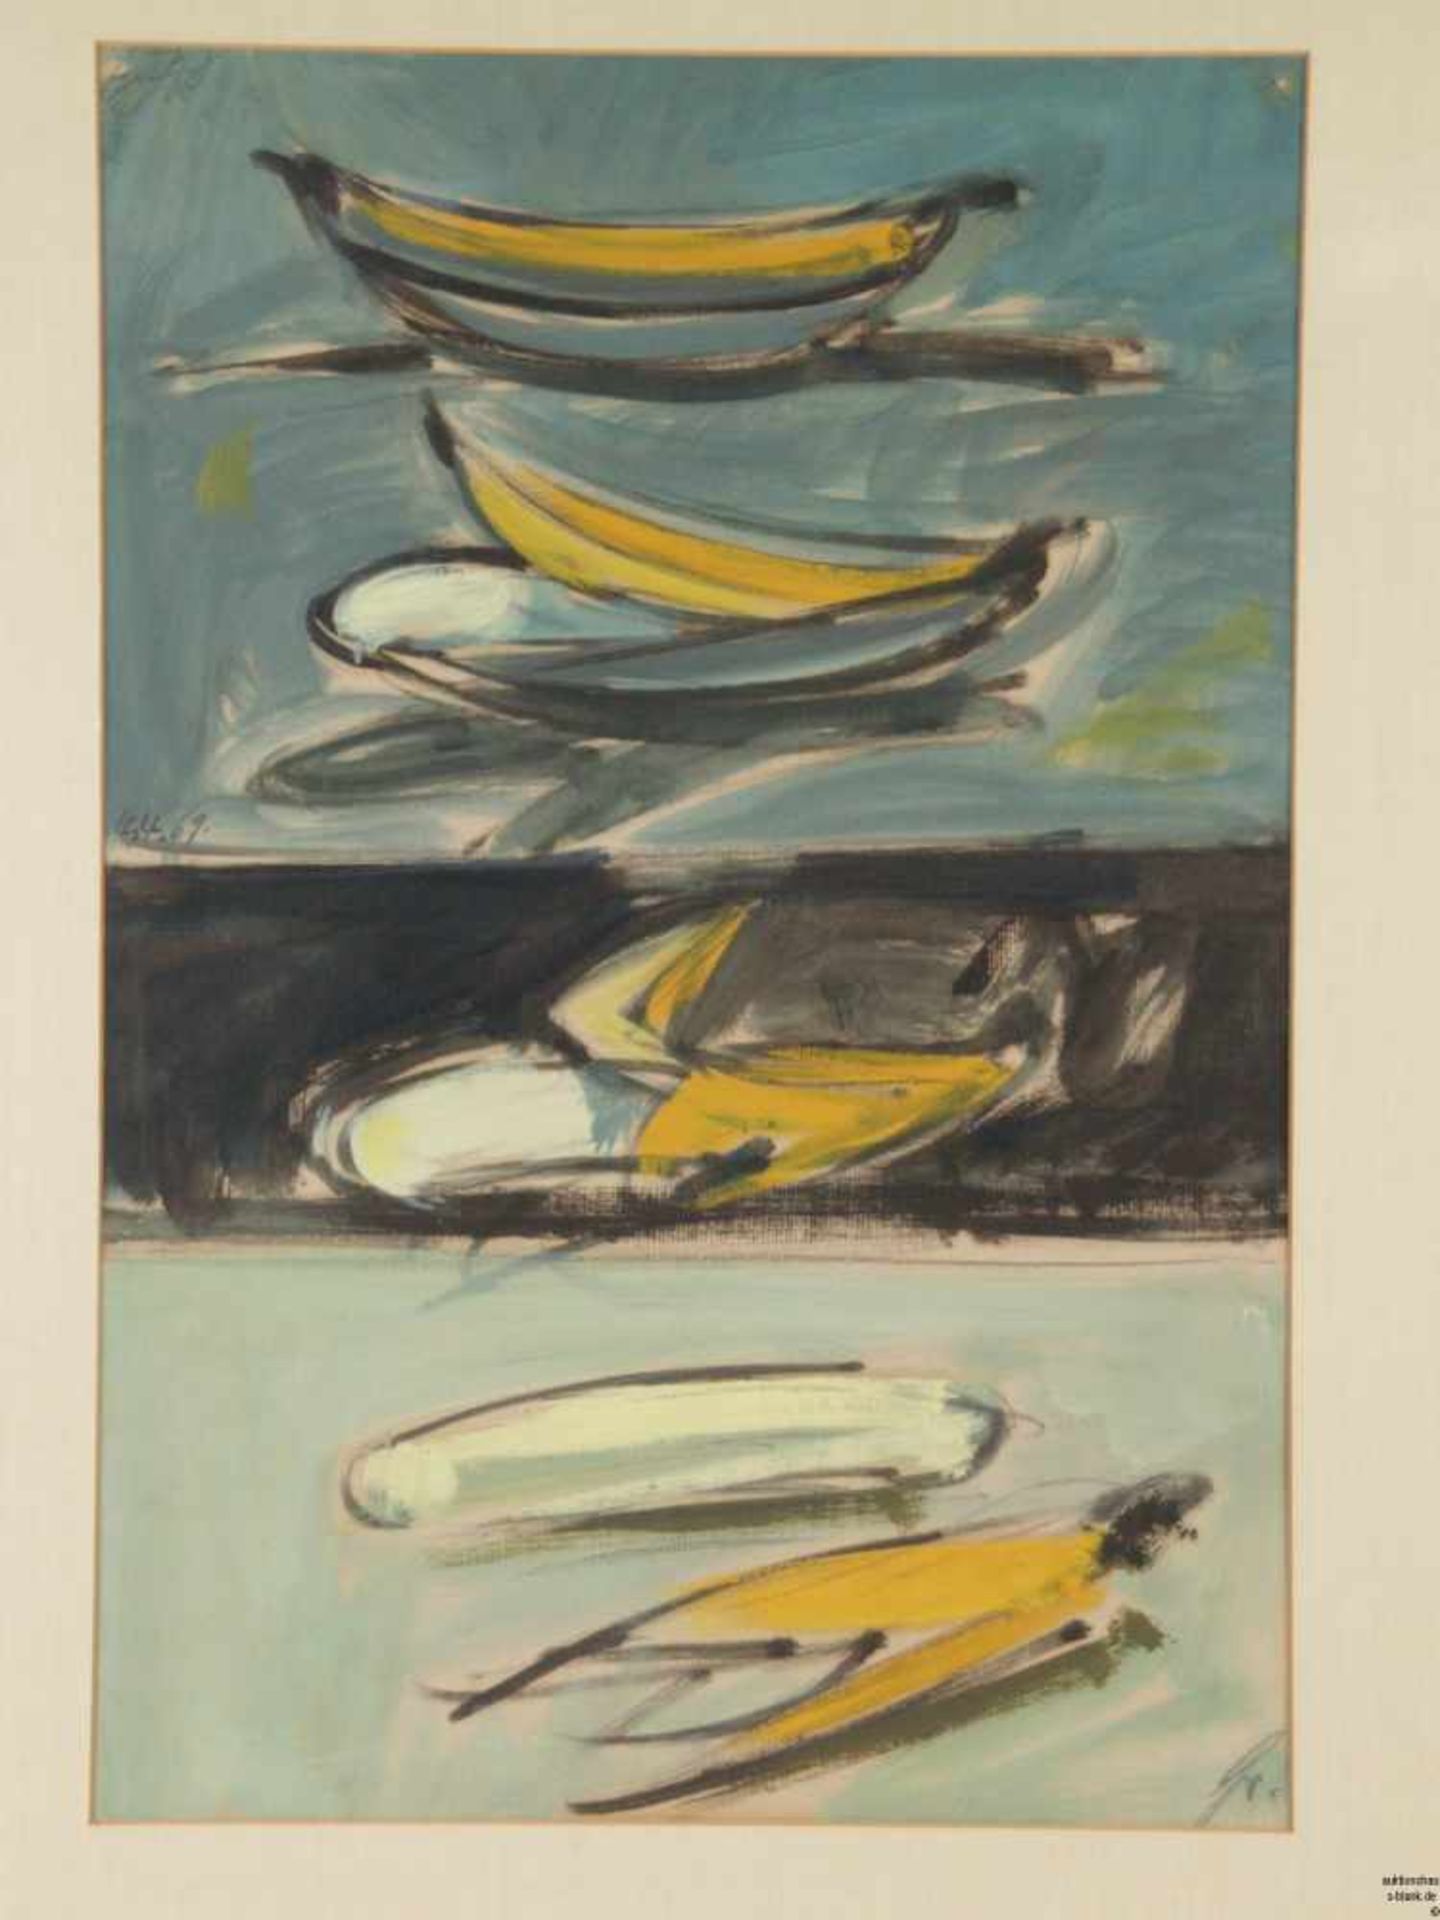 Monogrammist - 'Bananenstudie', Mischtechnik, unten rechts monogrammiert 'Gr.', links in der Mitte